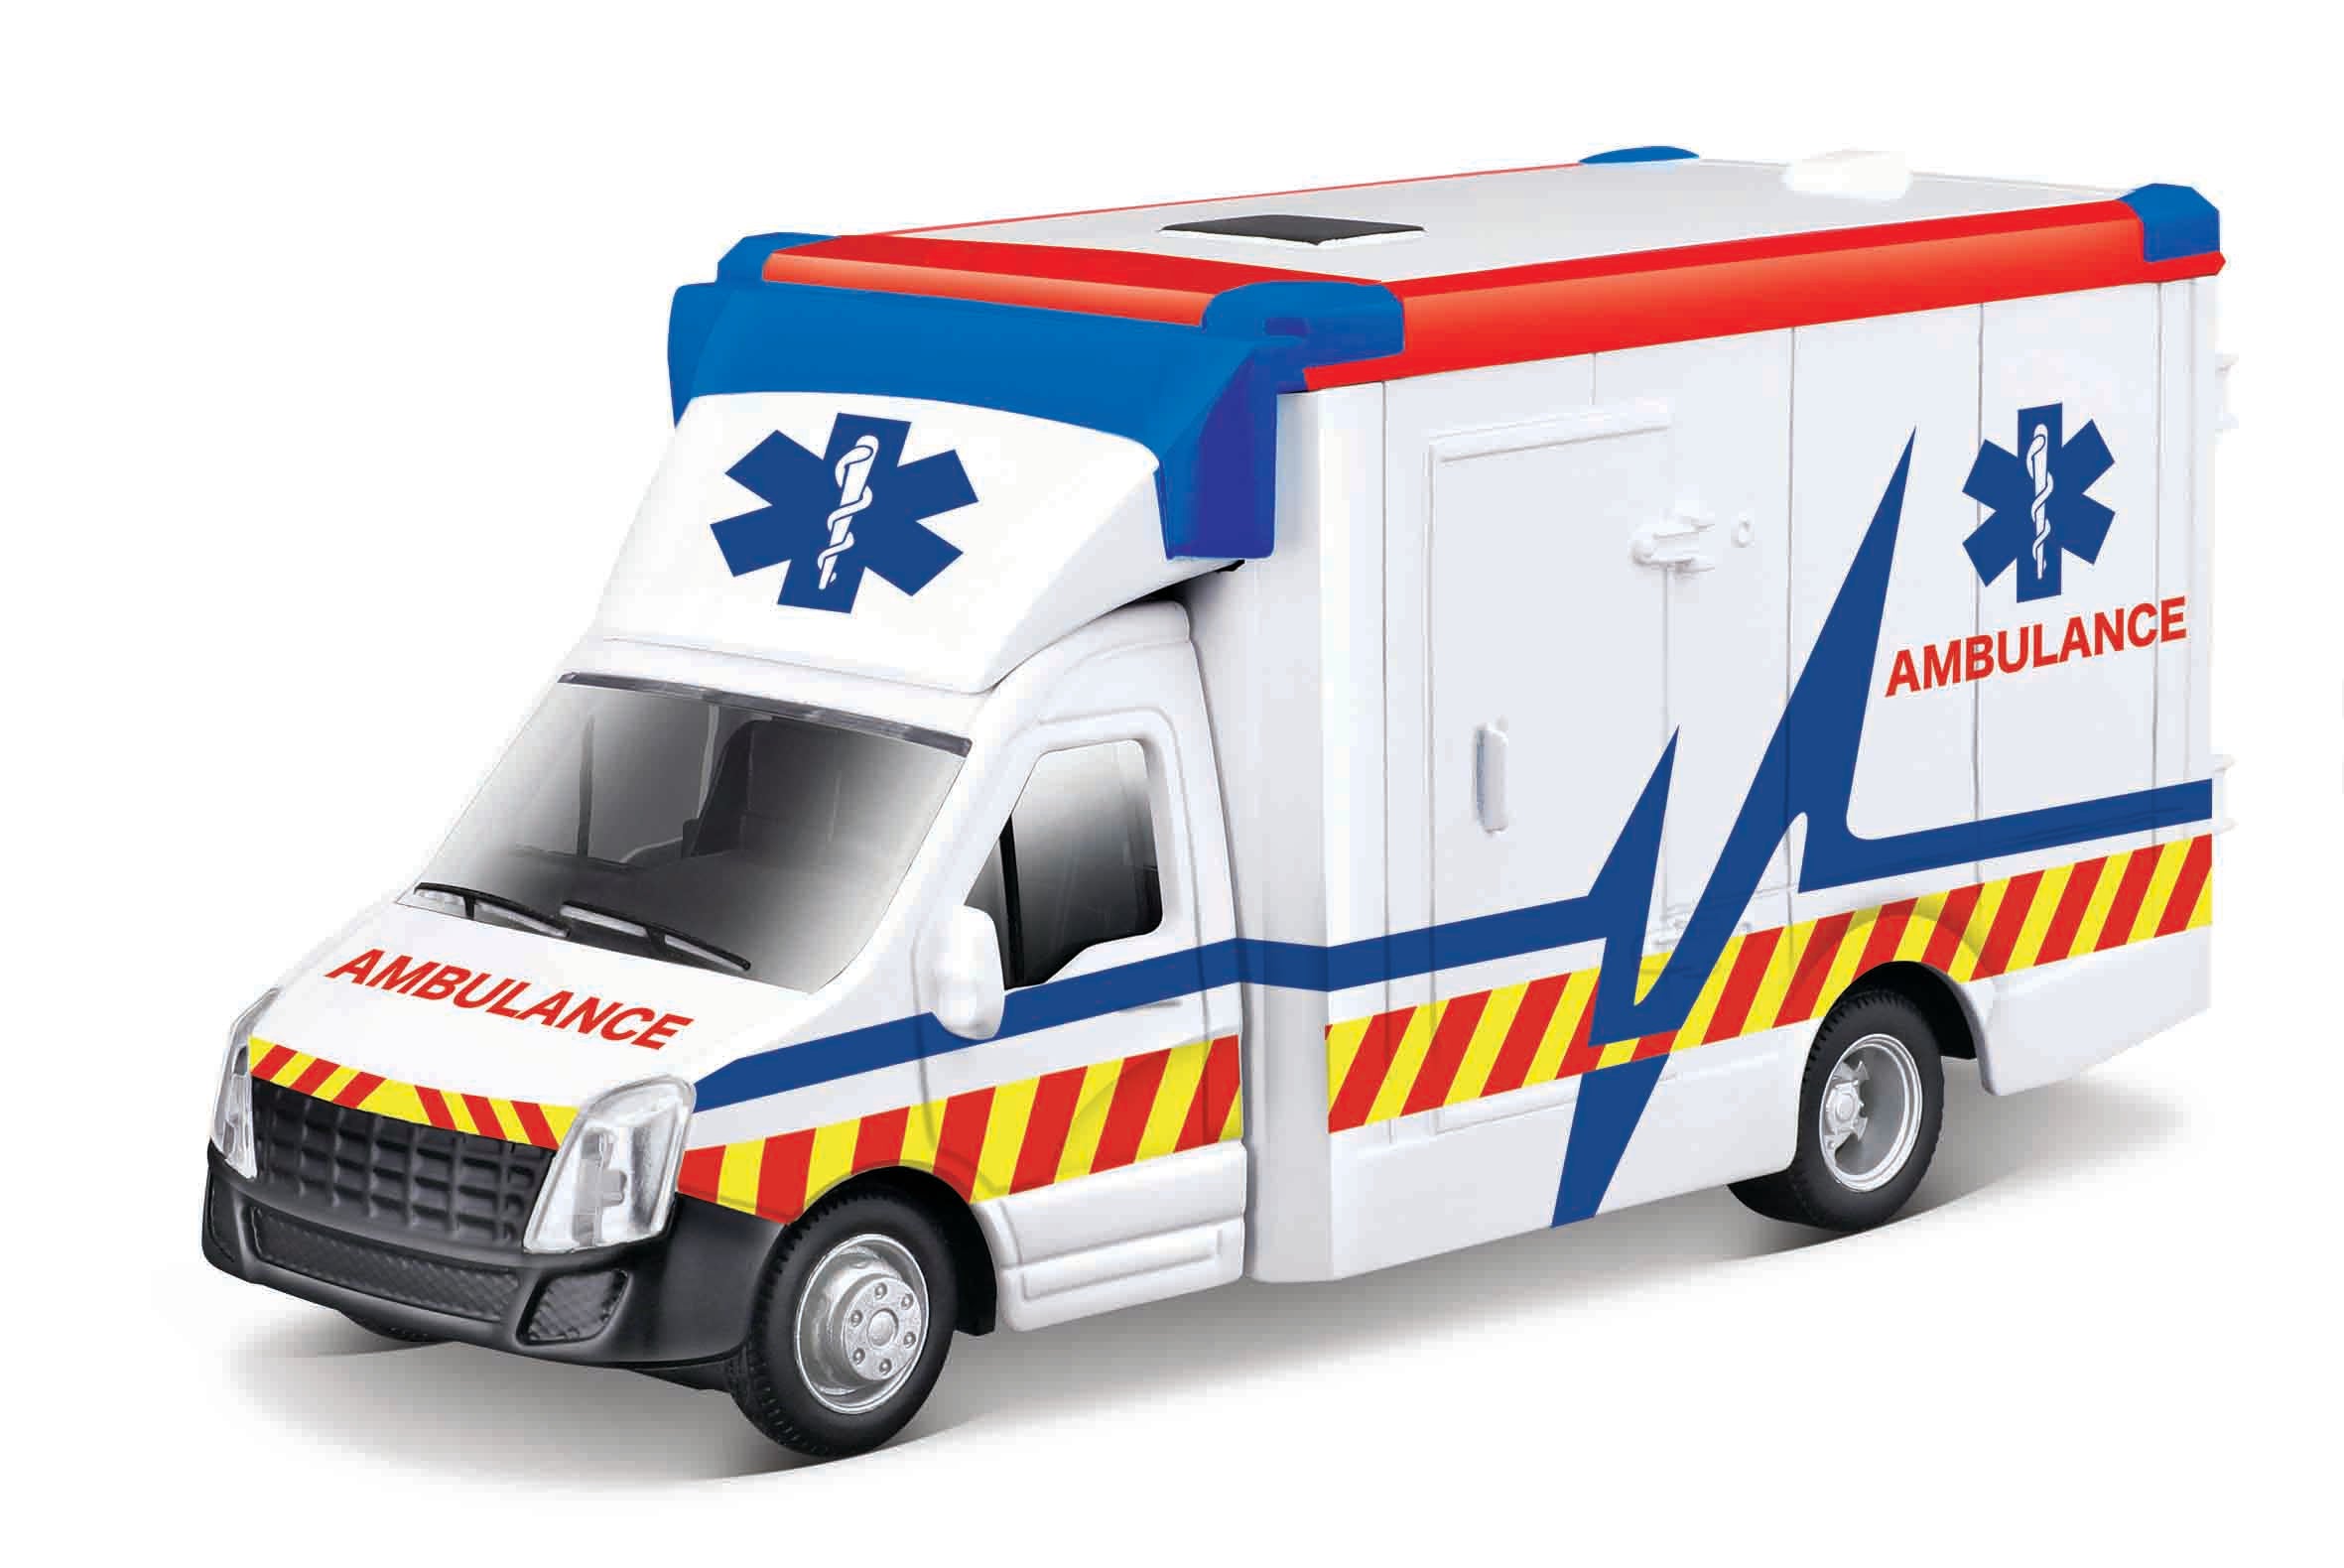 18-32266 - Bburago - Municipal Vehicles - Ambulance w/ Stretcher  - Bianca